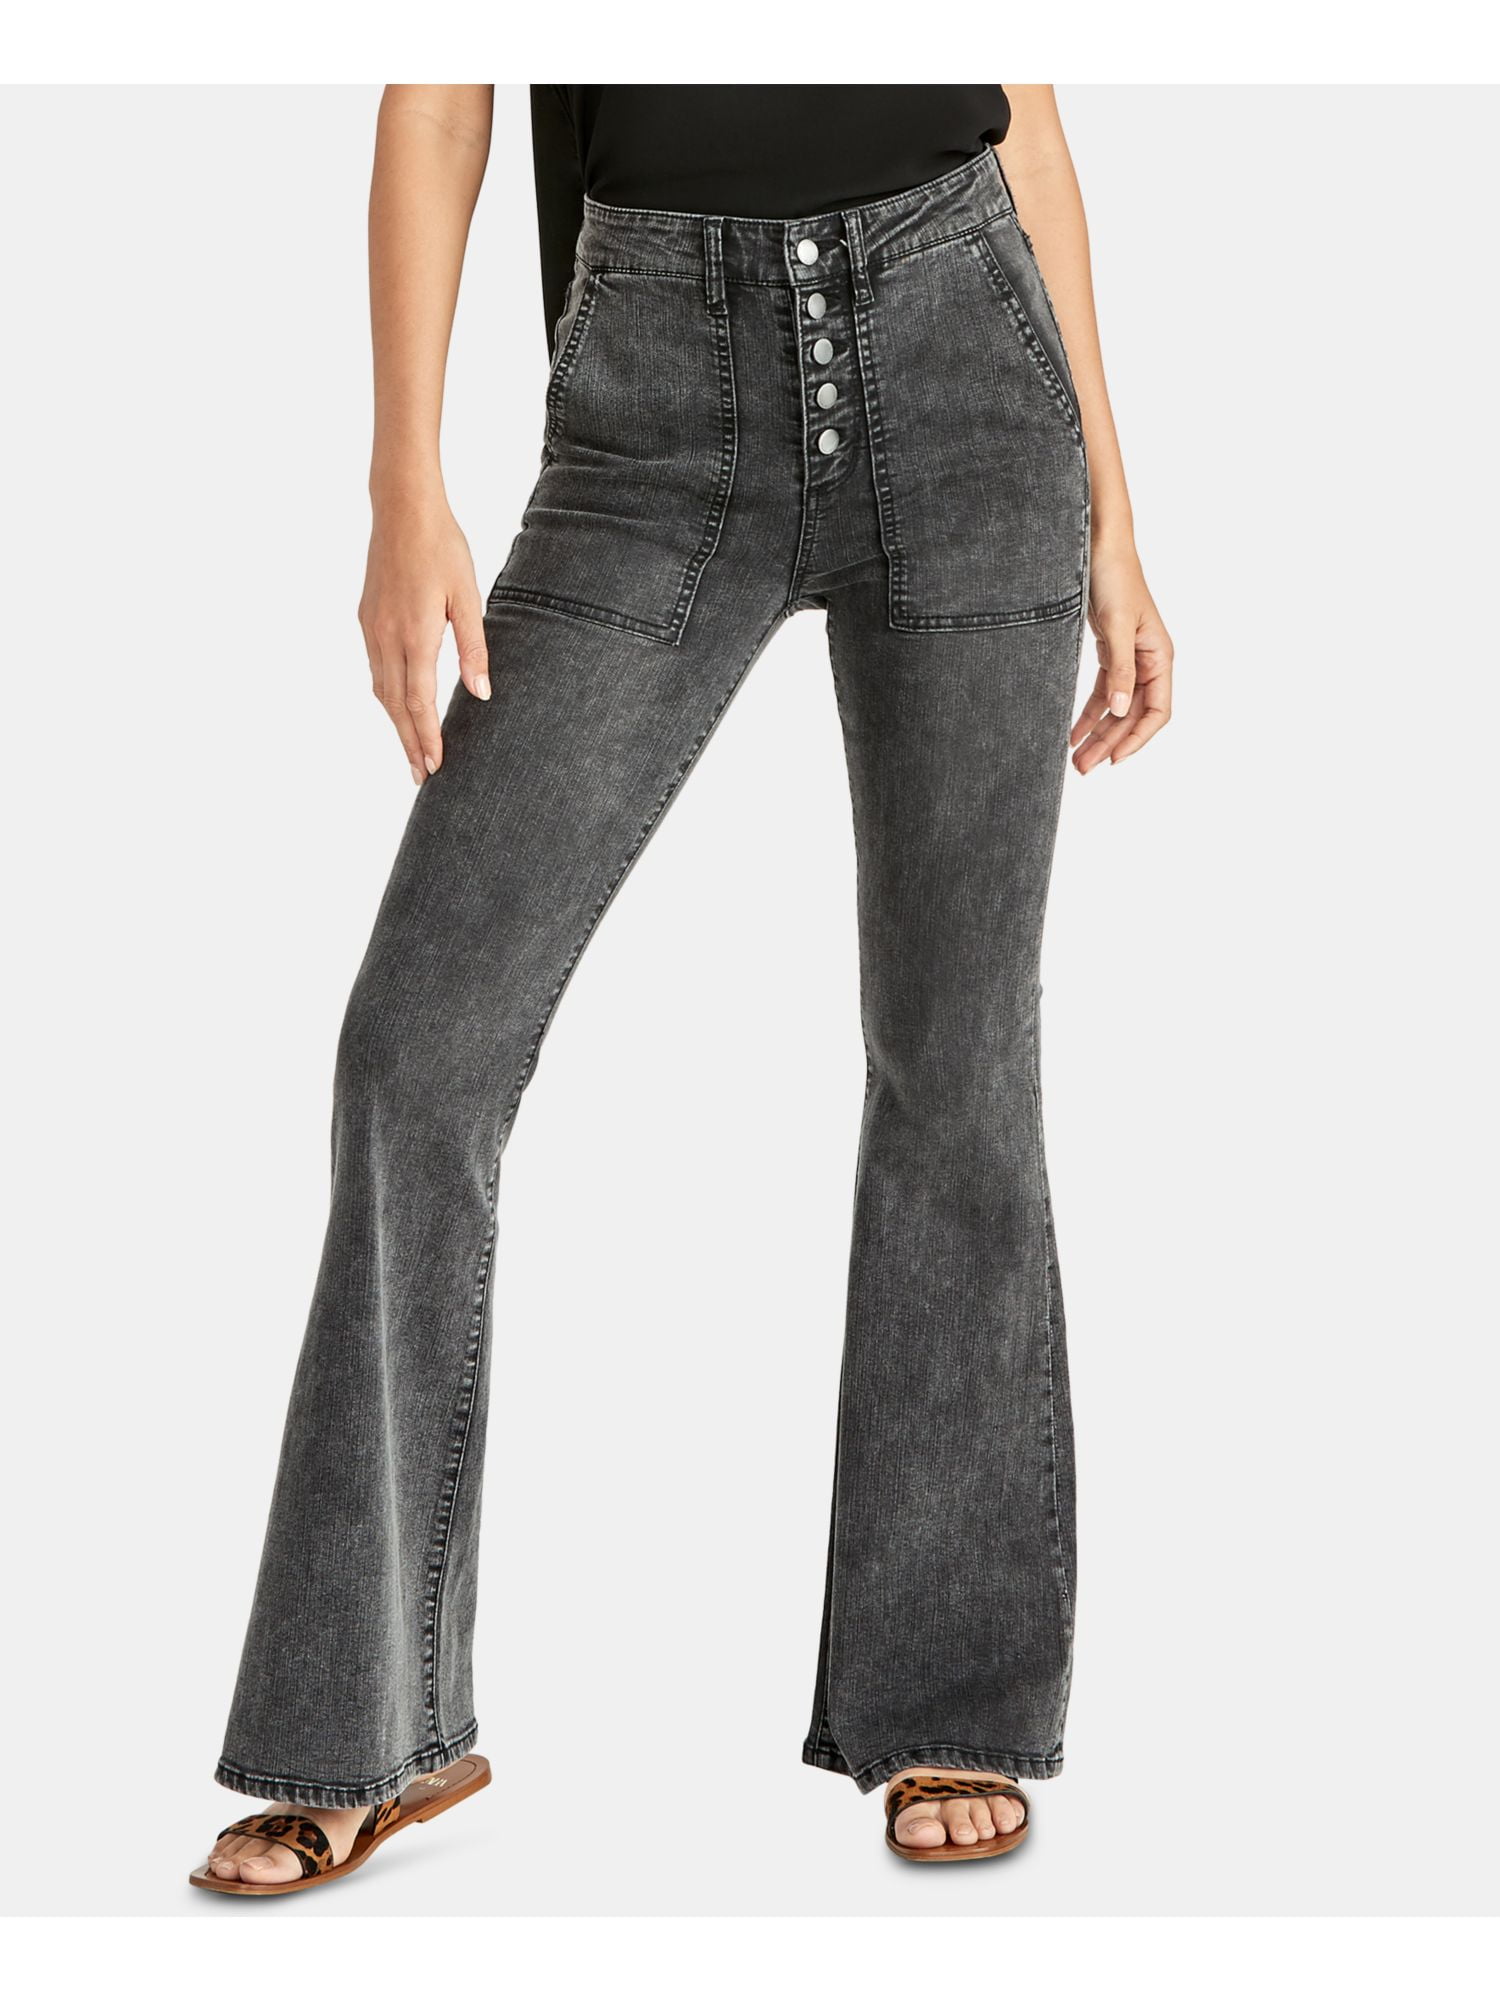 32 waist women's jeans